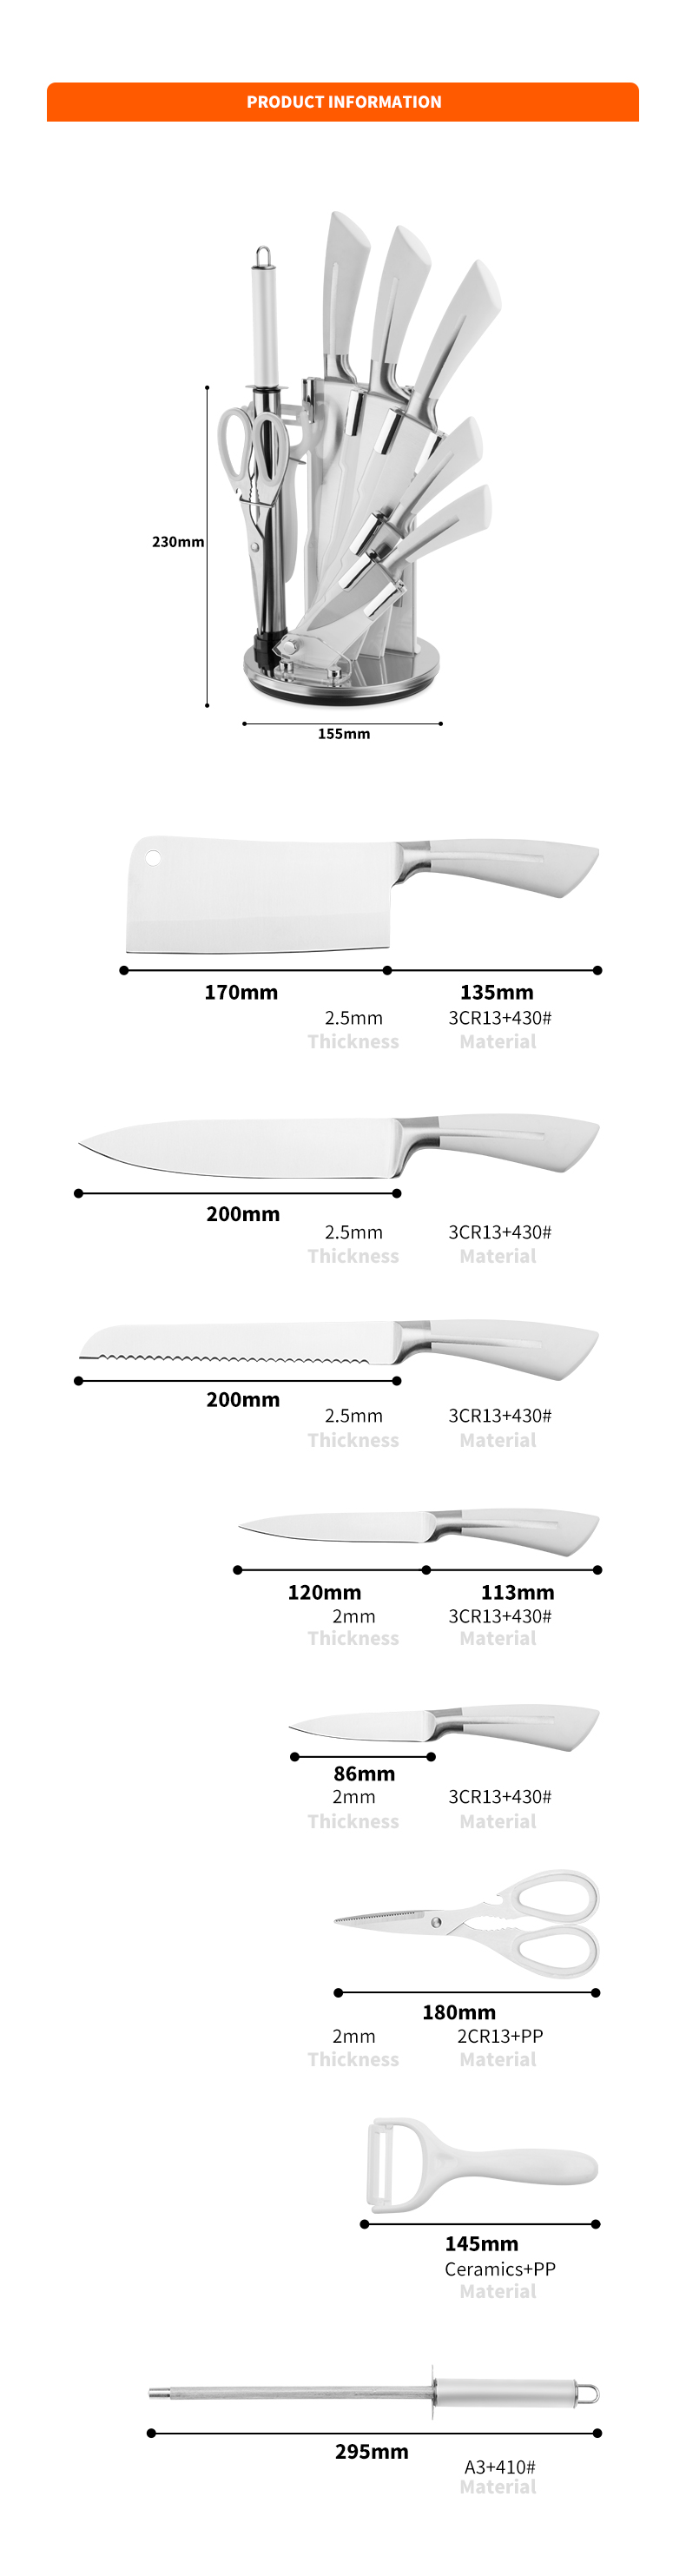 G127-Private Label طرح جدید 8 عدد 3cr13 چاقو آشپزخانه سرآشپز استیل ضد زنگ ست چاقو آشپزخانه با بلوک آسیلیک-ZX | چاقوی آشپزخانه، ابزار آشپزخانه، قالب کیک سیلیکونی، تخته برش، مجموعه ابزار پخت، چاقوی سرآشپز، چاقوی استیک، چاقوی برش دهنده، چاقوی کاربردی، چاقوی جداکننده، بلوک چاقو، پایه چاقو، چاقوی سانتوکو، چاقوی کودک نوپا، چاقوی پلاستیکی، چاقوی پلاستیکی چاقو، چاقوی رنگارنگ، چاقوی استیل ضد زنگ، درب بازکن قوطی، درب بازکن بطری، صافی چای، رنده، تخم مرغ کوب، ابزار آشپزخانه نایلونی، ابزار آشپزخانه سیلیکونی، کاتر شیرینی، ست چاقوی پخت و پز، چاقو تیزکن، پوست کن، کیک زنیفی چاقو، کاردک سیلیکونی، قاشق سیلیکونی، تانگ غذا، چاقوی آهنگری، قیچی آشپزخانه، چاقوی پخت کیک، چاقوی آشپزی کودکان، چاقوی حکاکی